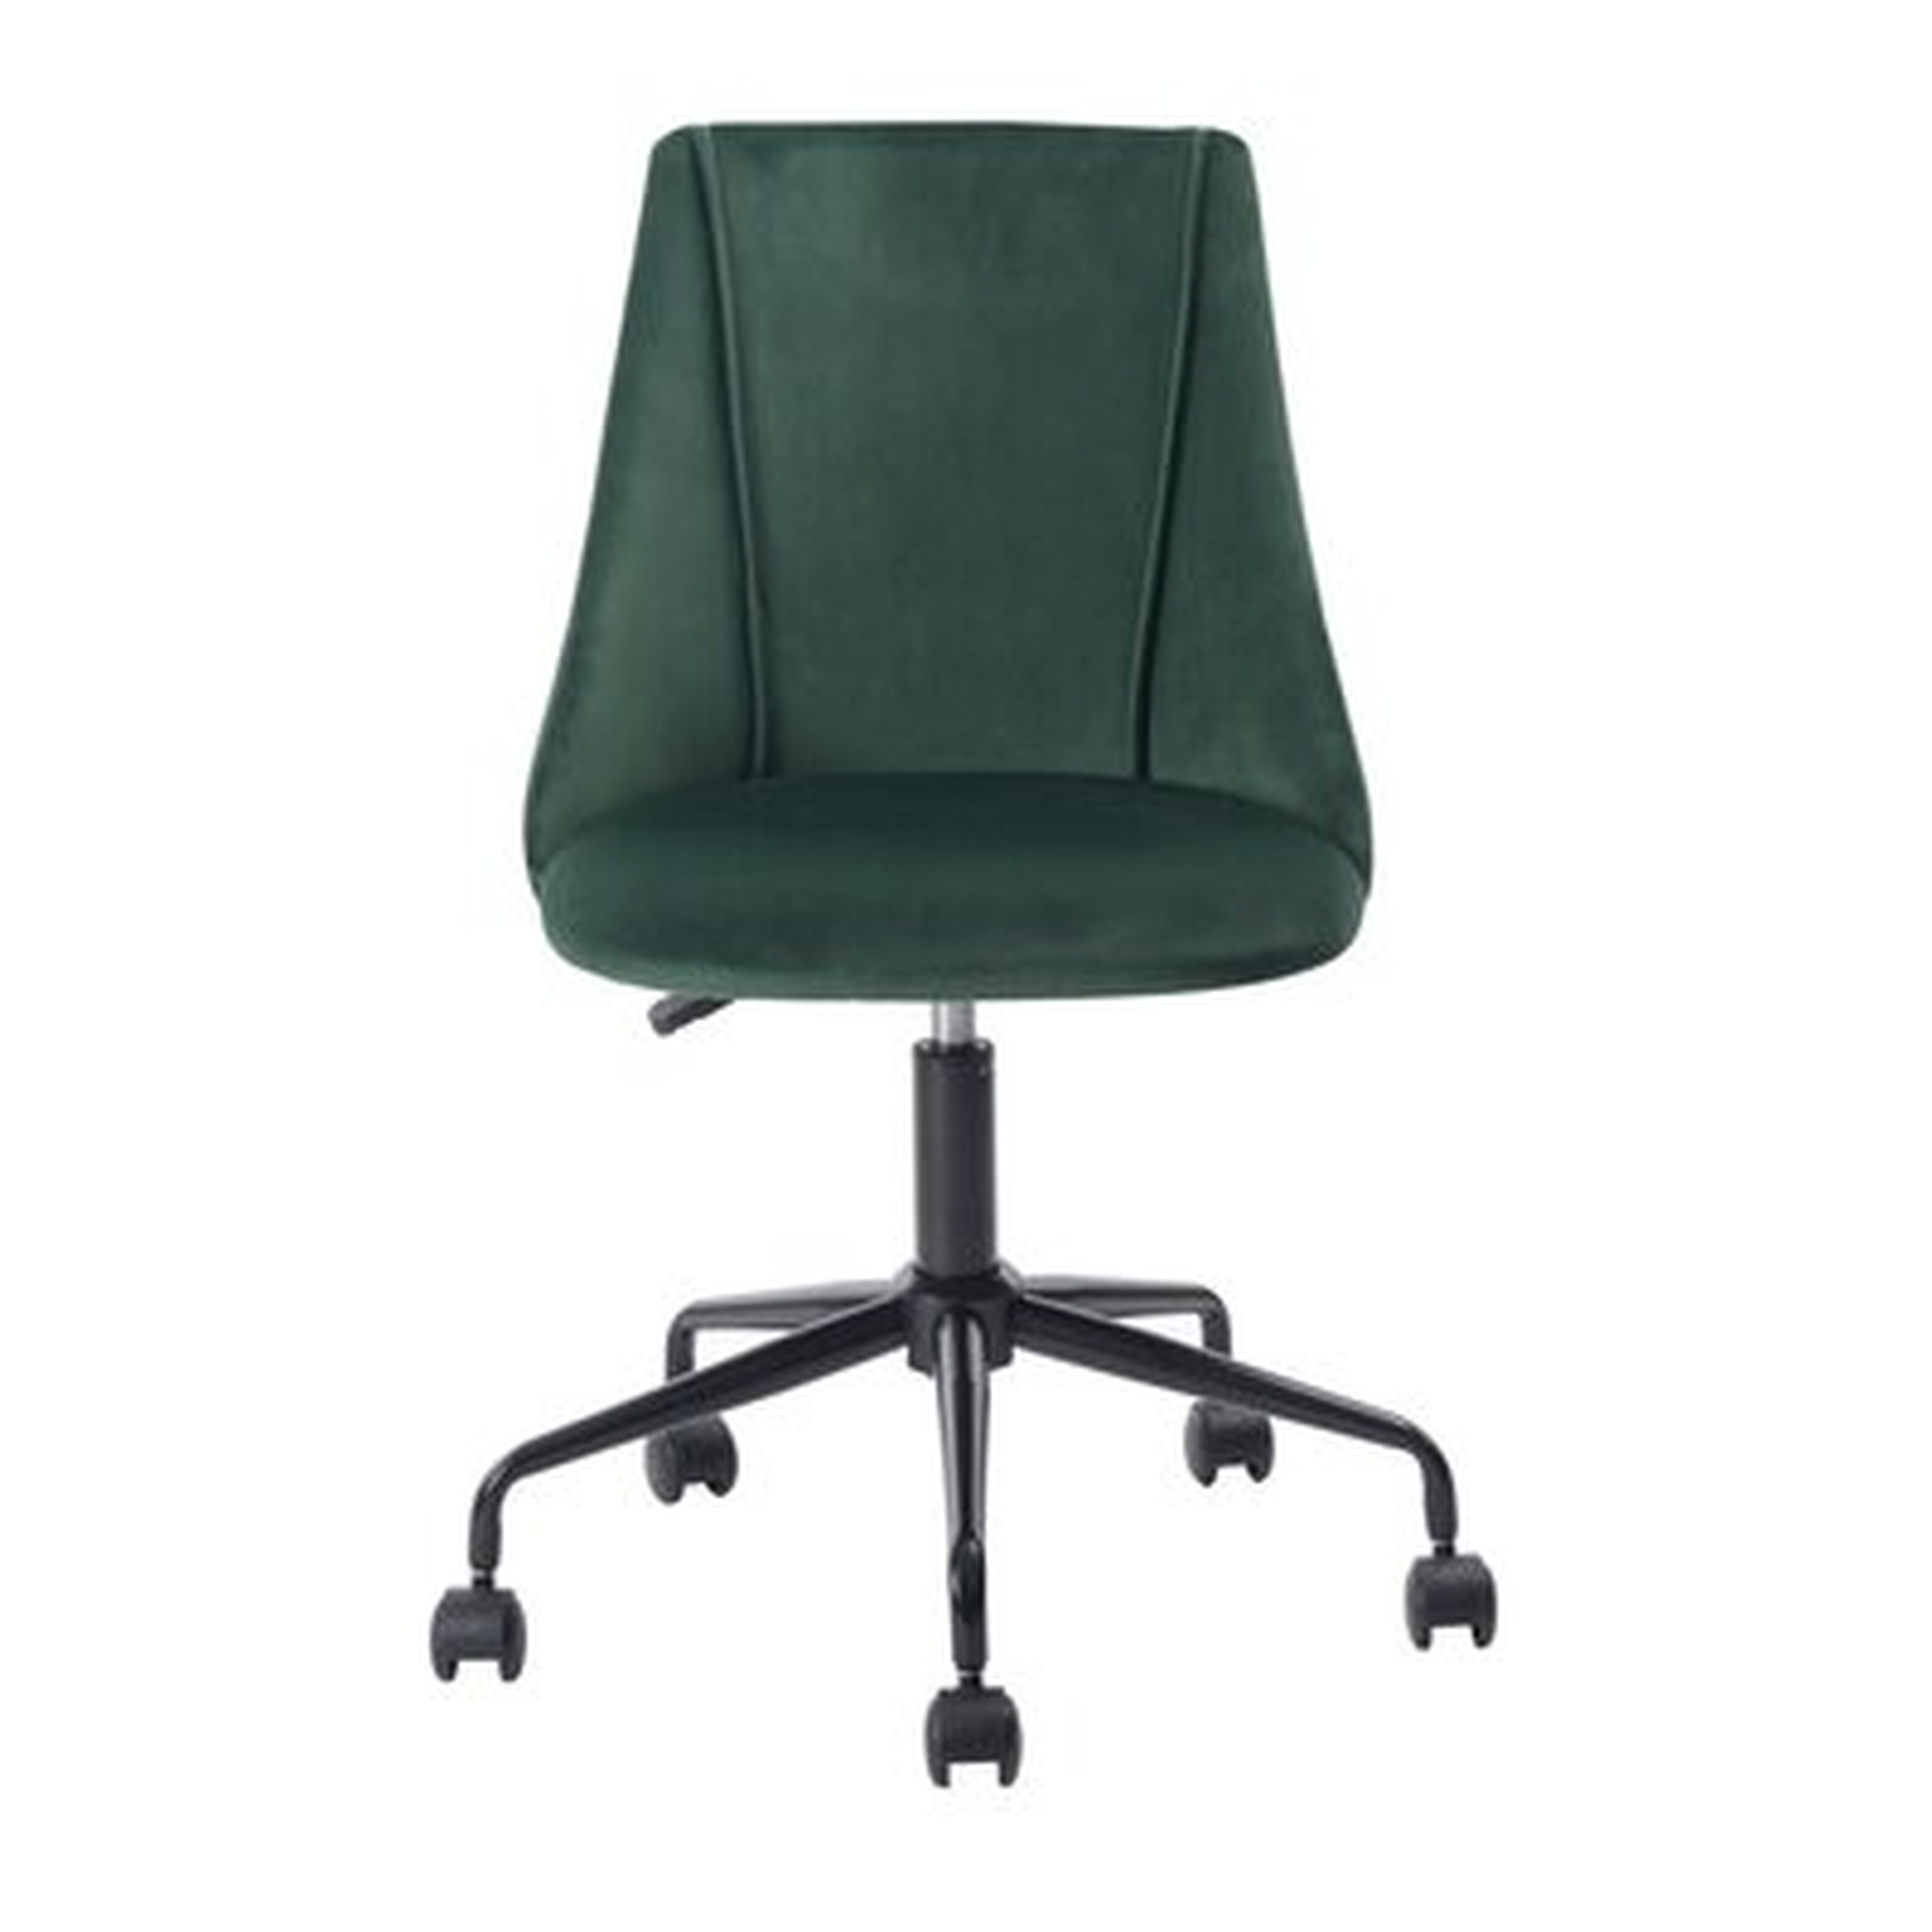 Upholstered Task Chair/ Home Office Chair - Wayfair